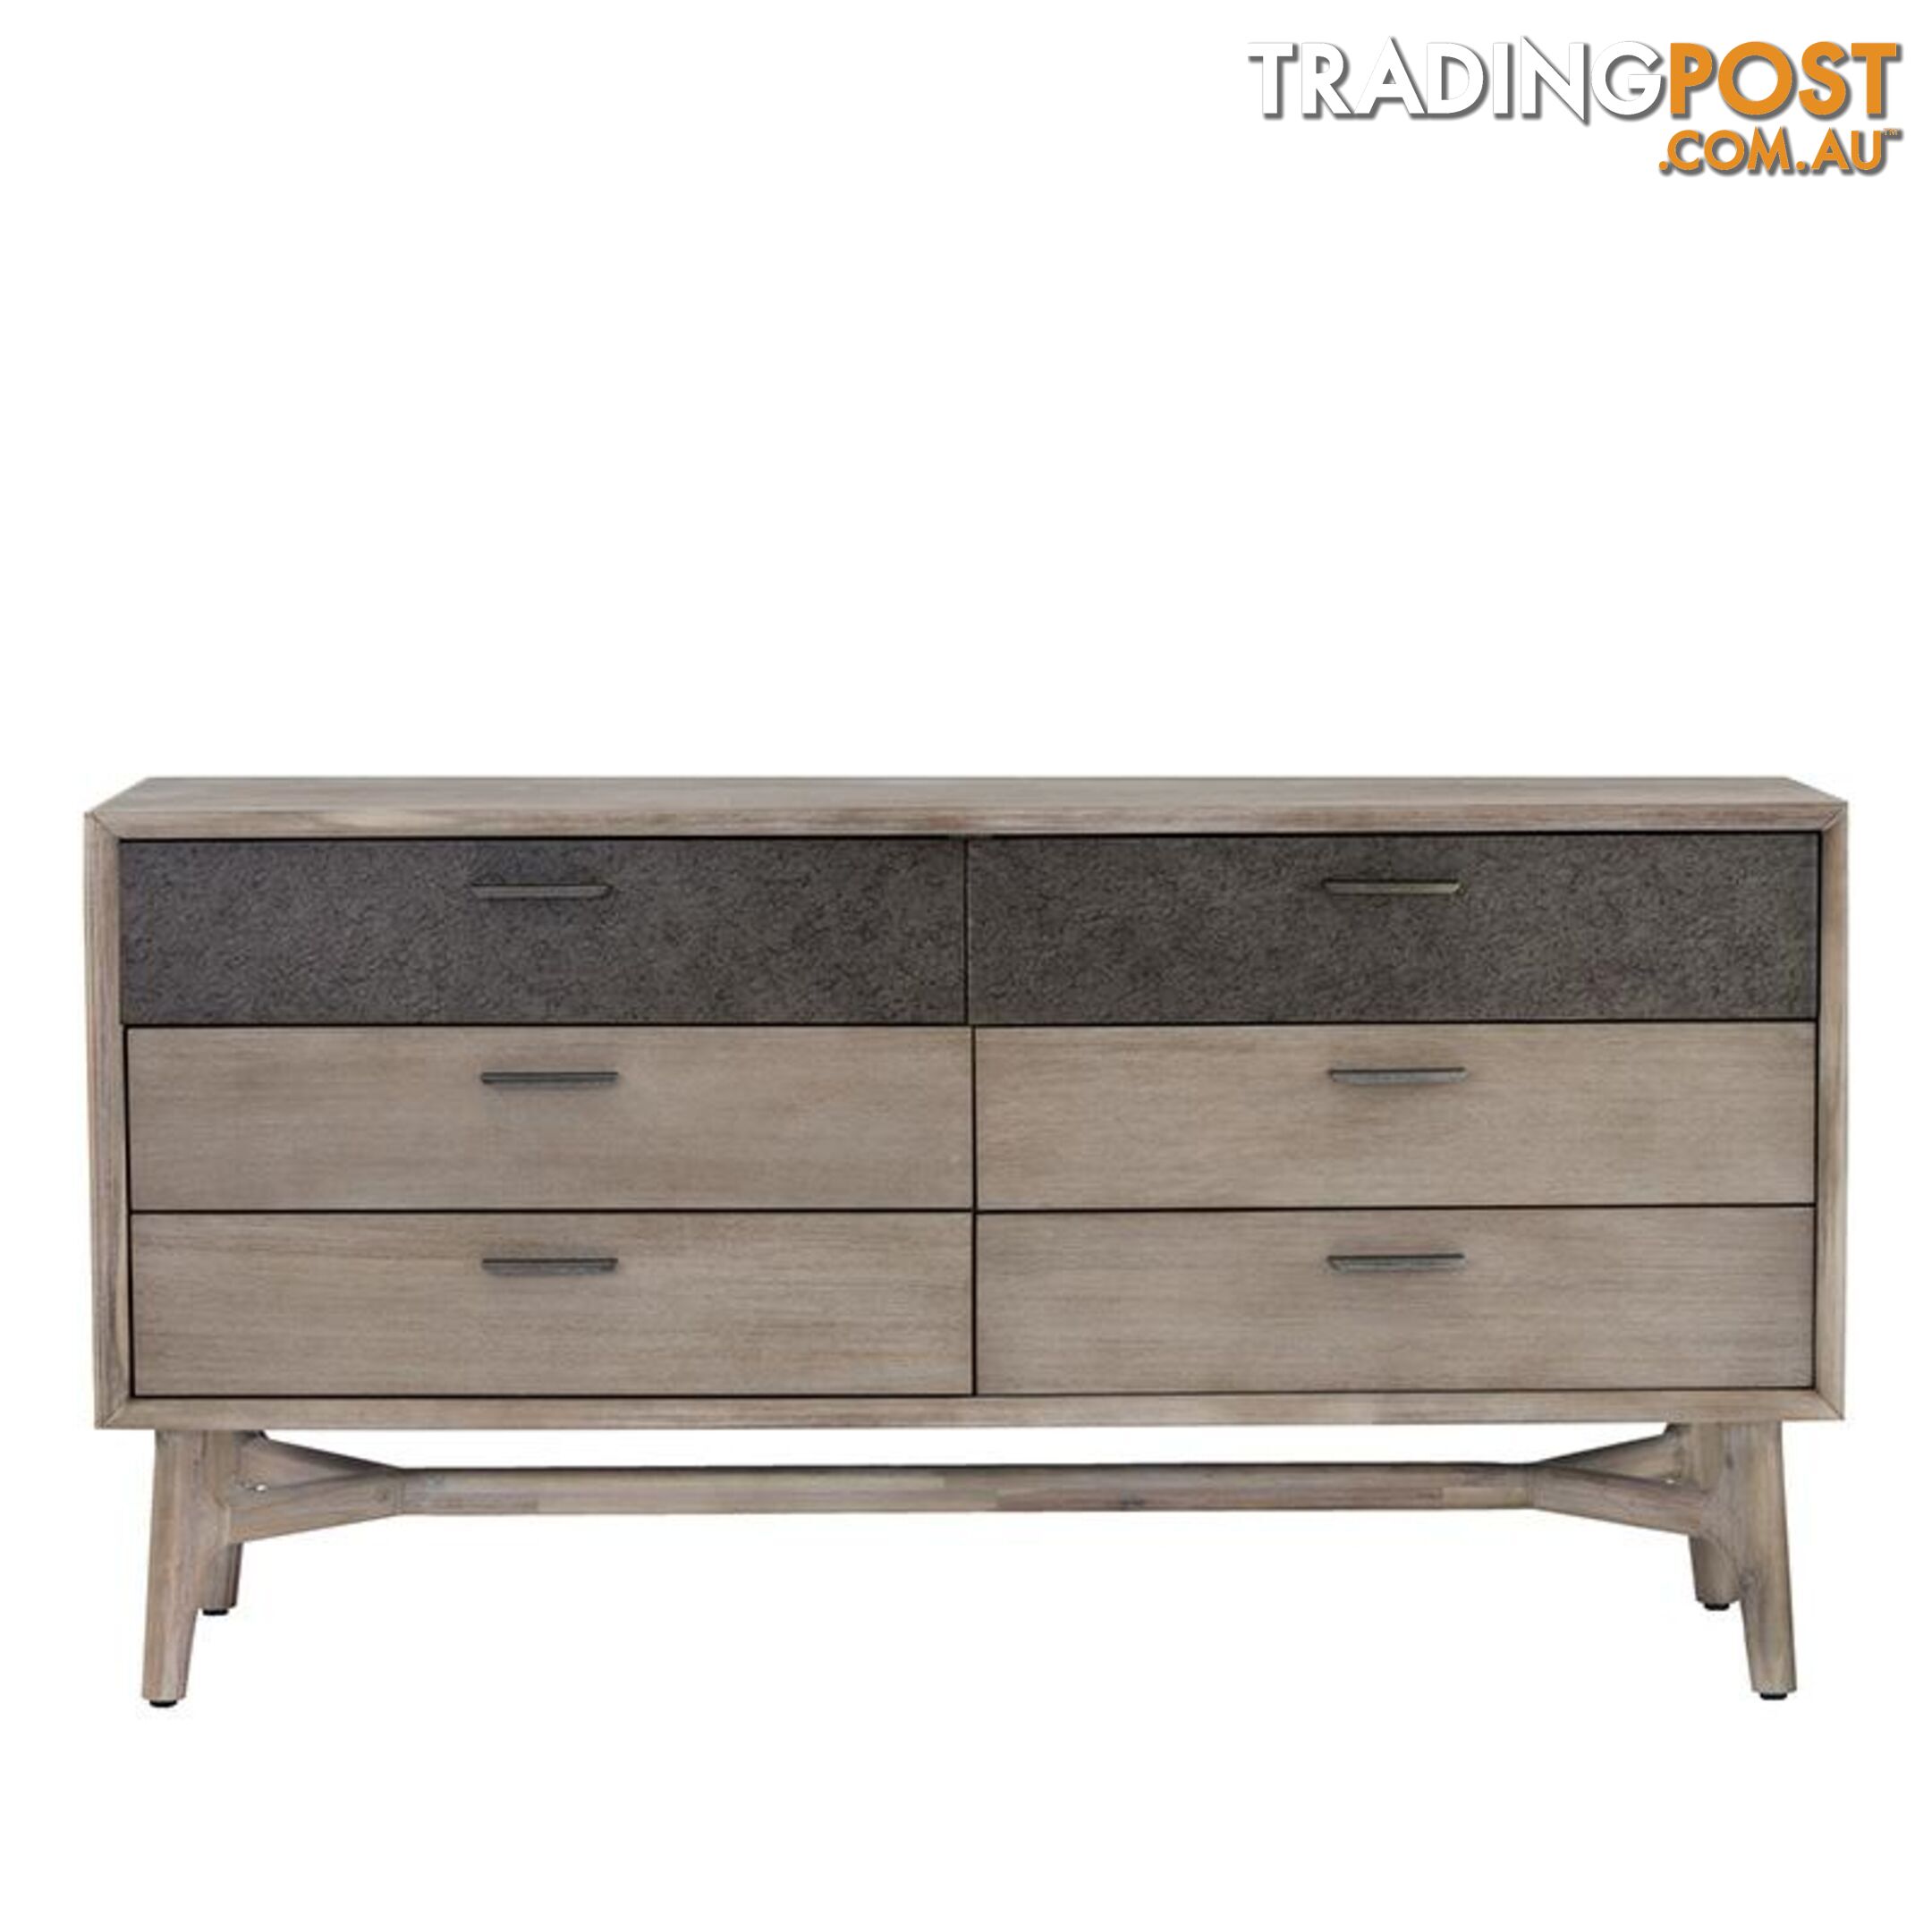 CORBIN Dresser 6 Drawers 155cm Acacia Solid Wood - Sandblast - 355003 - 9334719009179